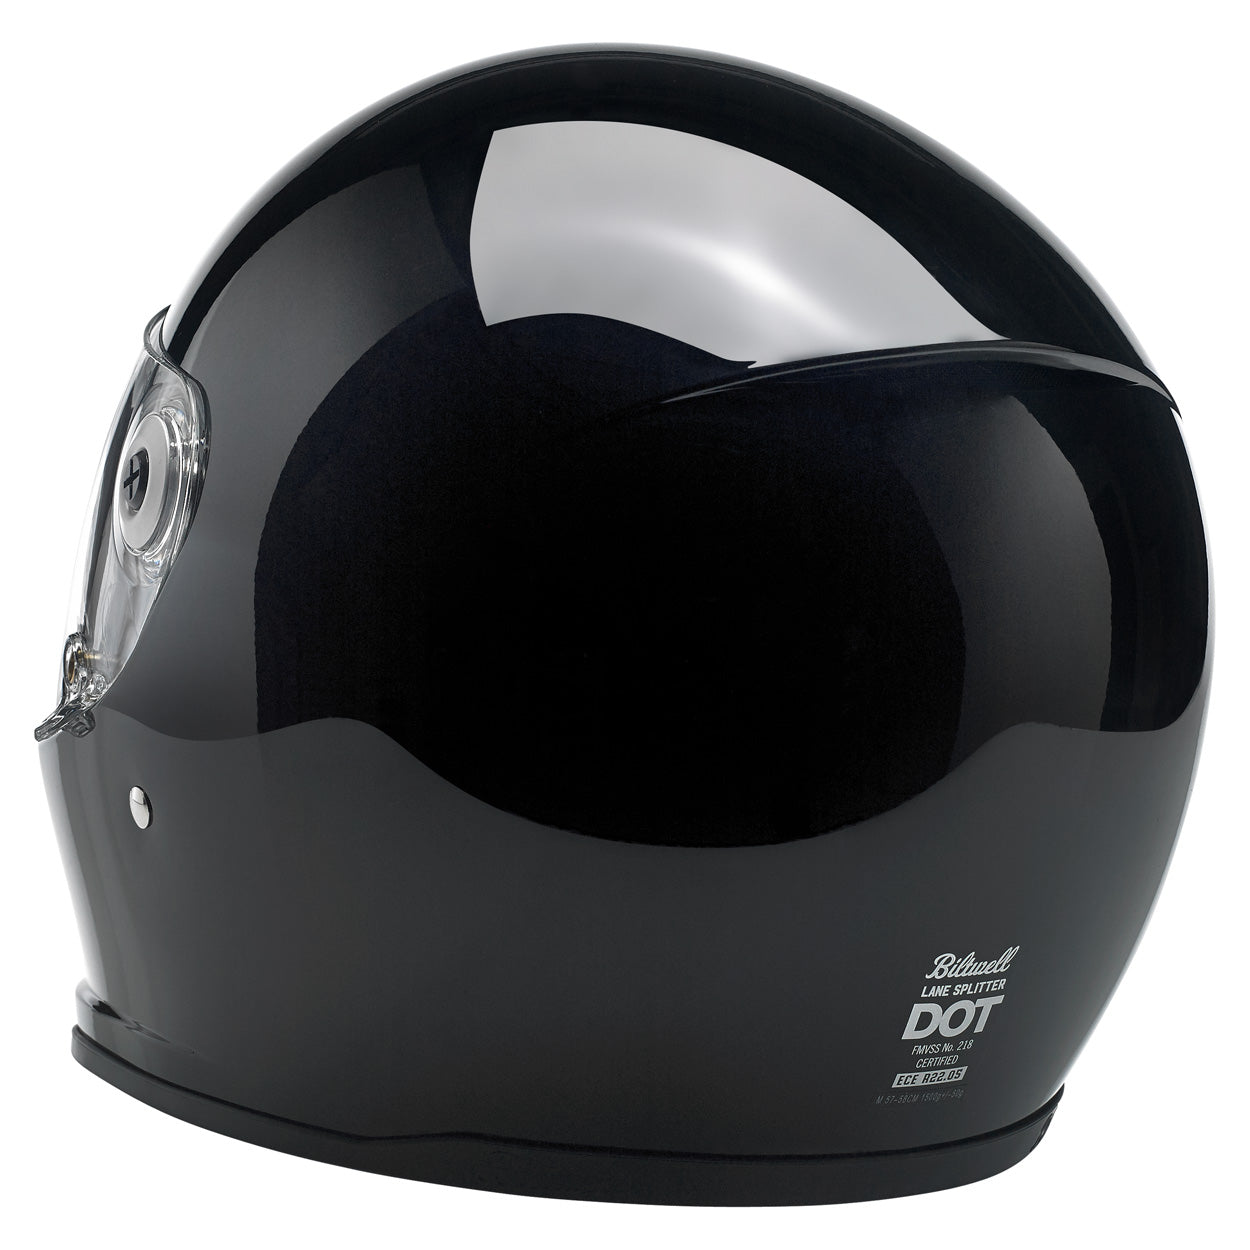 CLOSEOUT Lane Splitter ECE R22.05 Helmet - Gloss Black